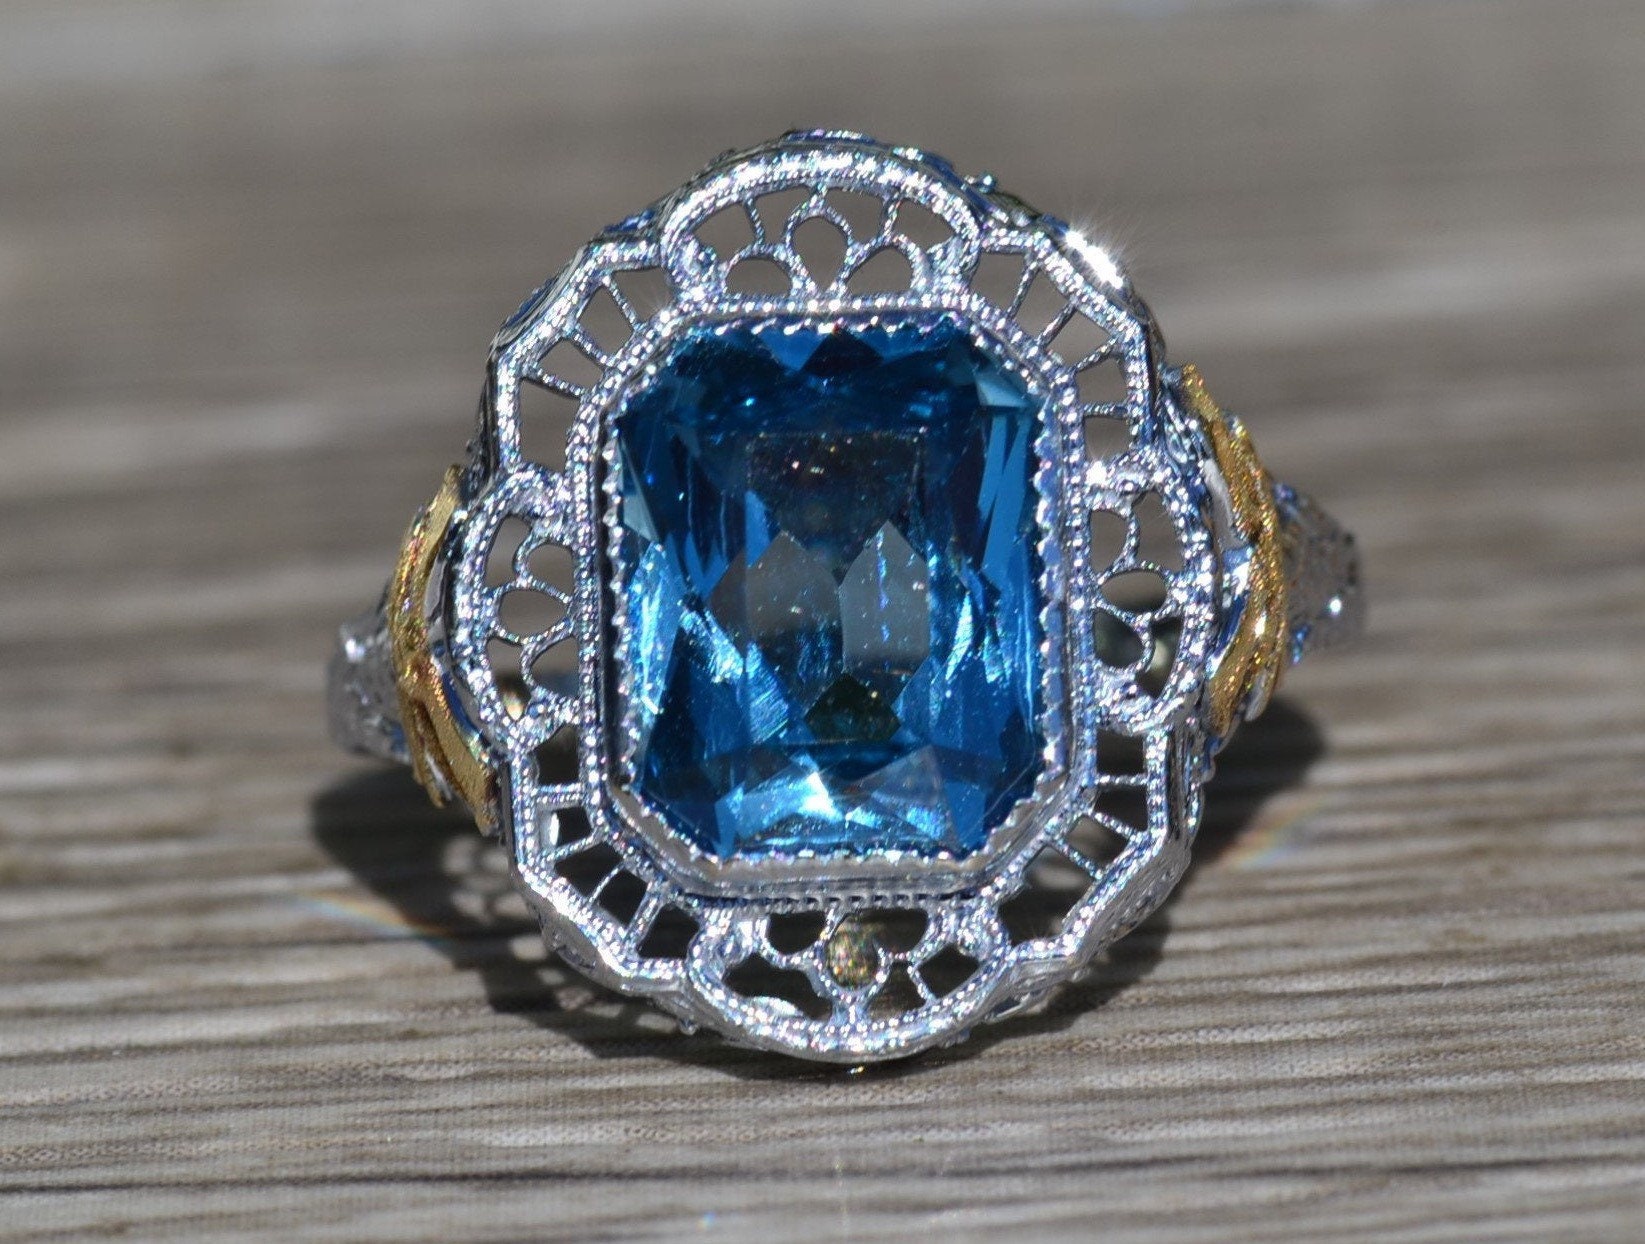 FINE JEWELRY Mens Diamond Accent Genuine Blue Spinel 14K Gold